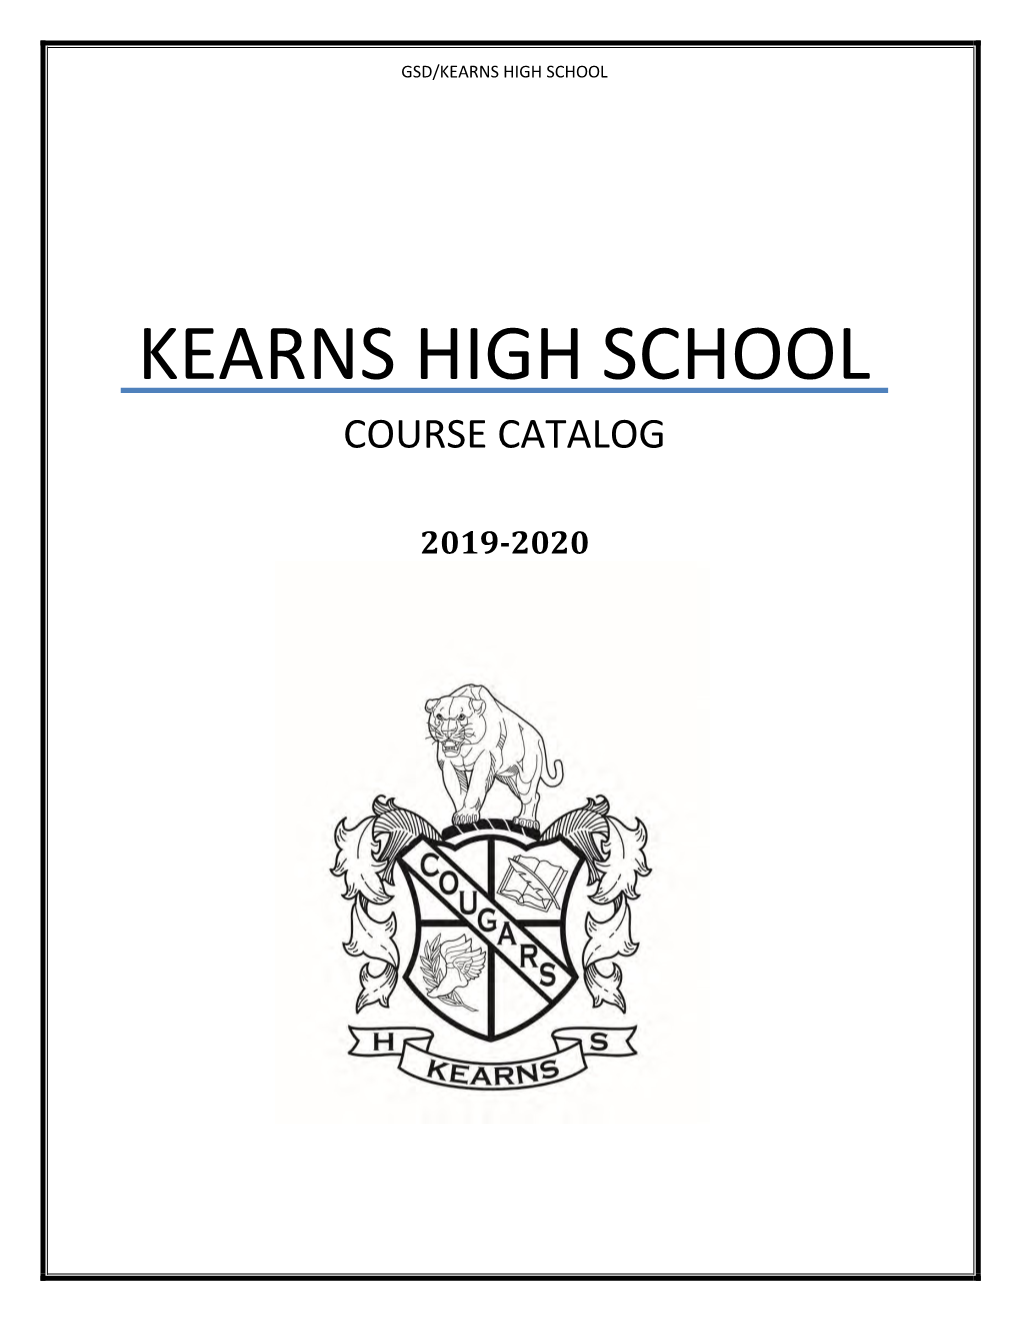 Kearns High School Course Catalog 2019-2020